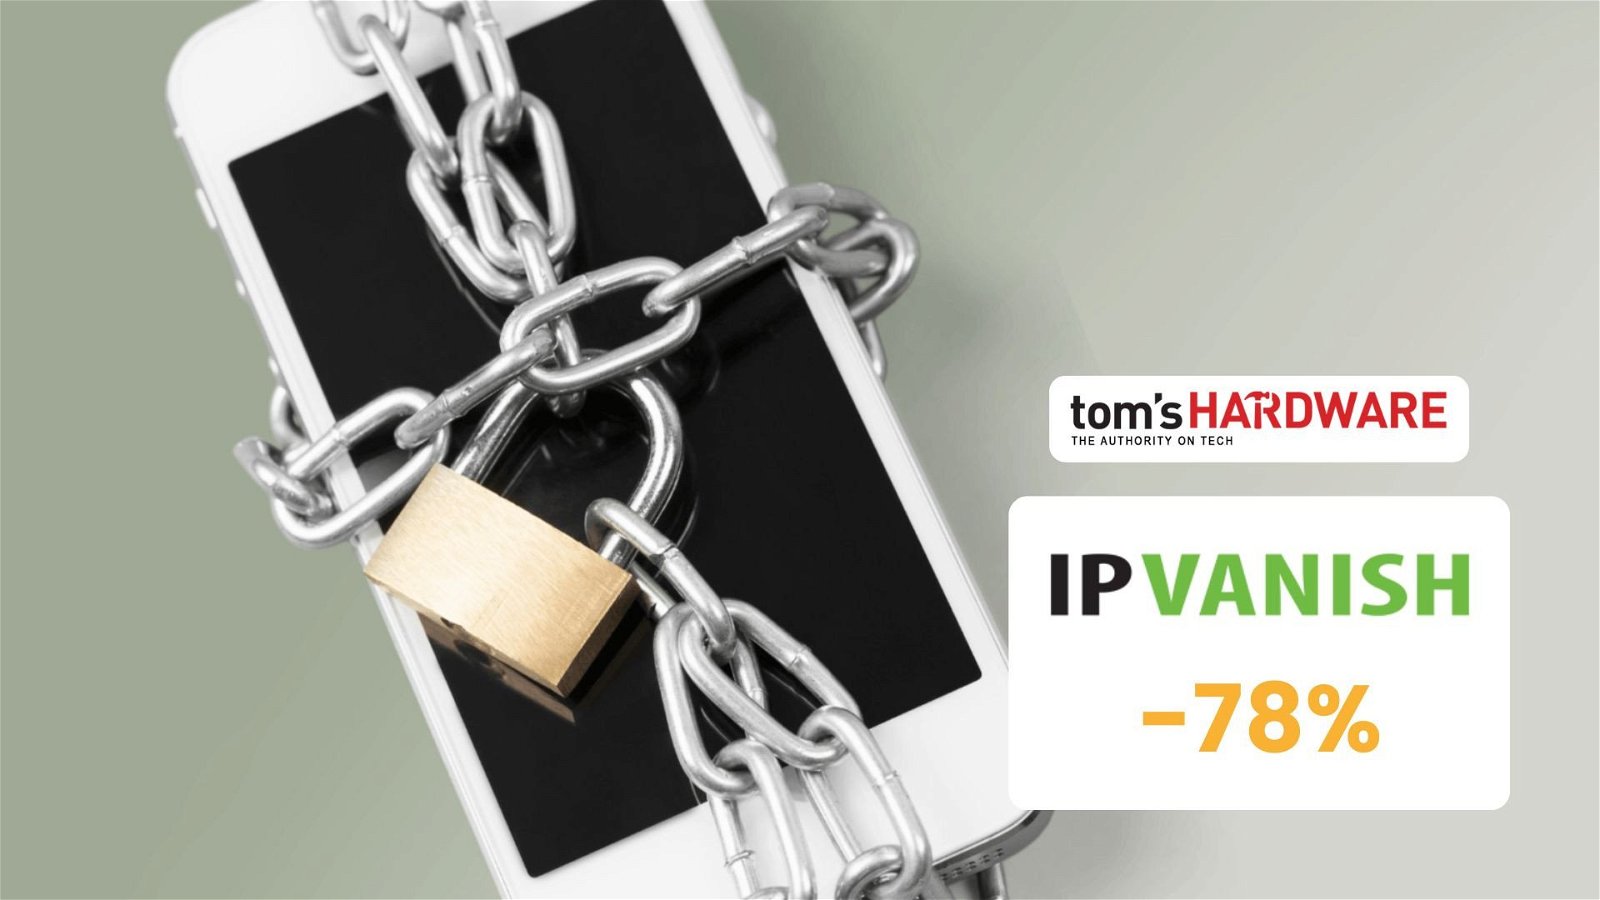 Immagine di IPVanish in offerta al 78% per una protezione online totale!